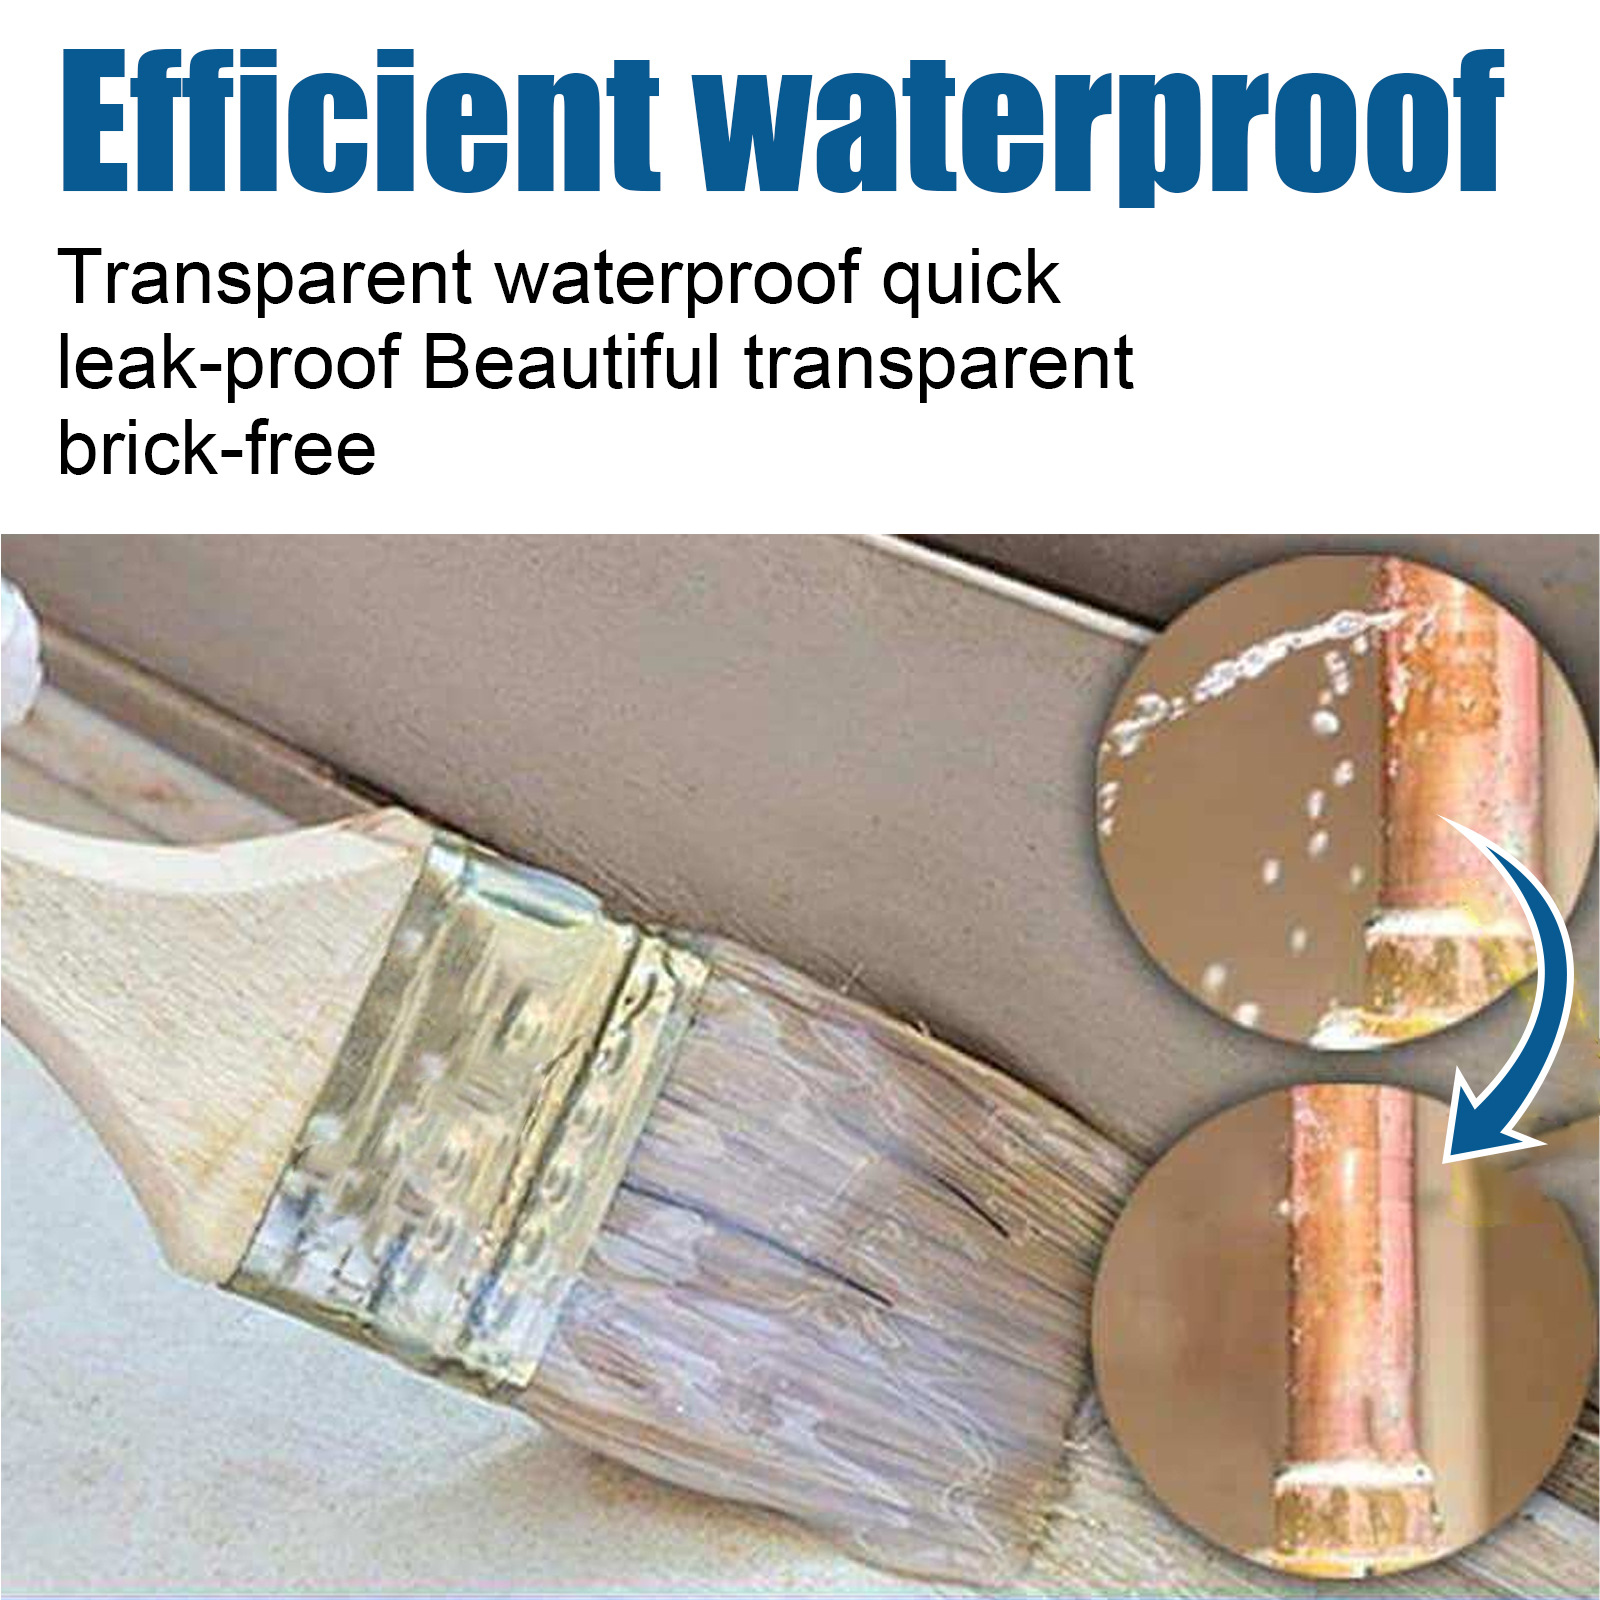 Jue-Fish Transparent Waterproof Adhesive Transparent Waterproof Coating Bathroom Balcony Anti-Smashing Brick Roof Leak-Proof Adhesive